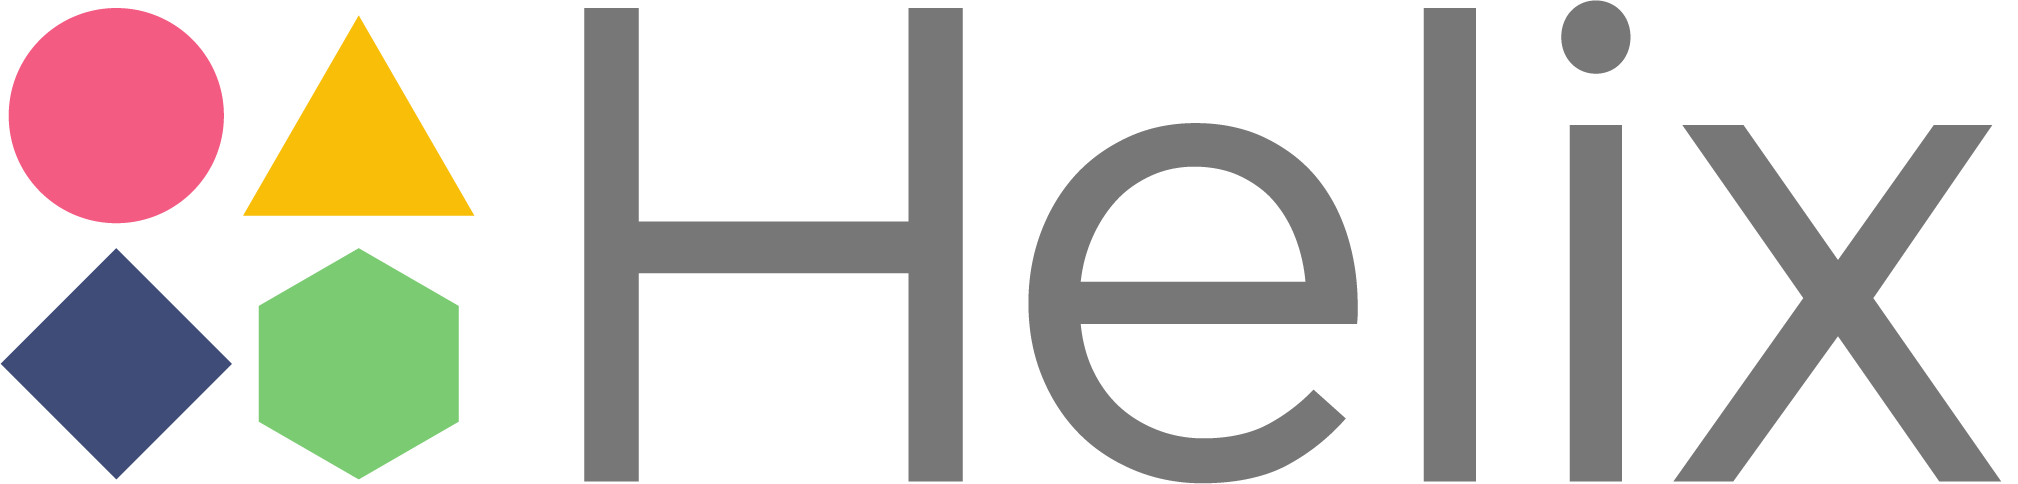 Helix Logo - Helix - Follow Your DNA